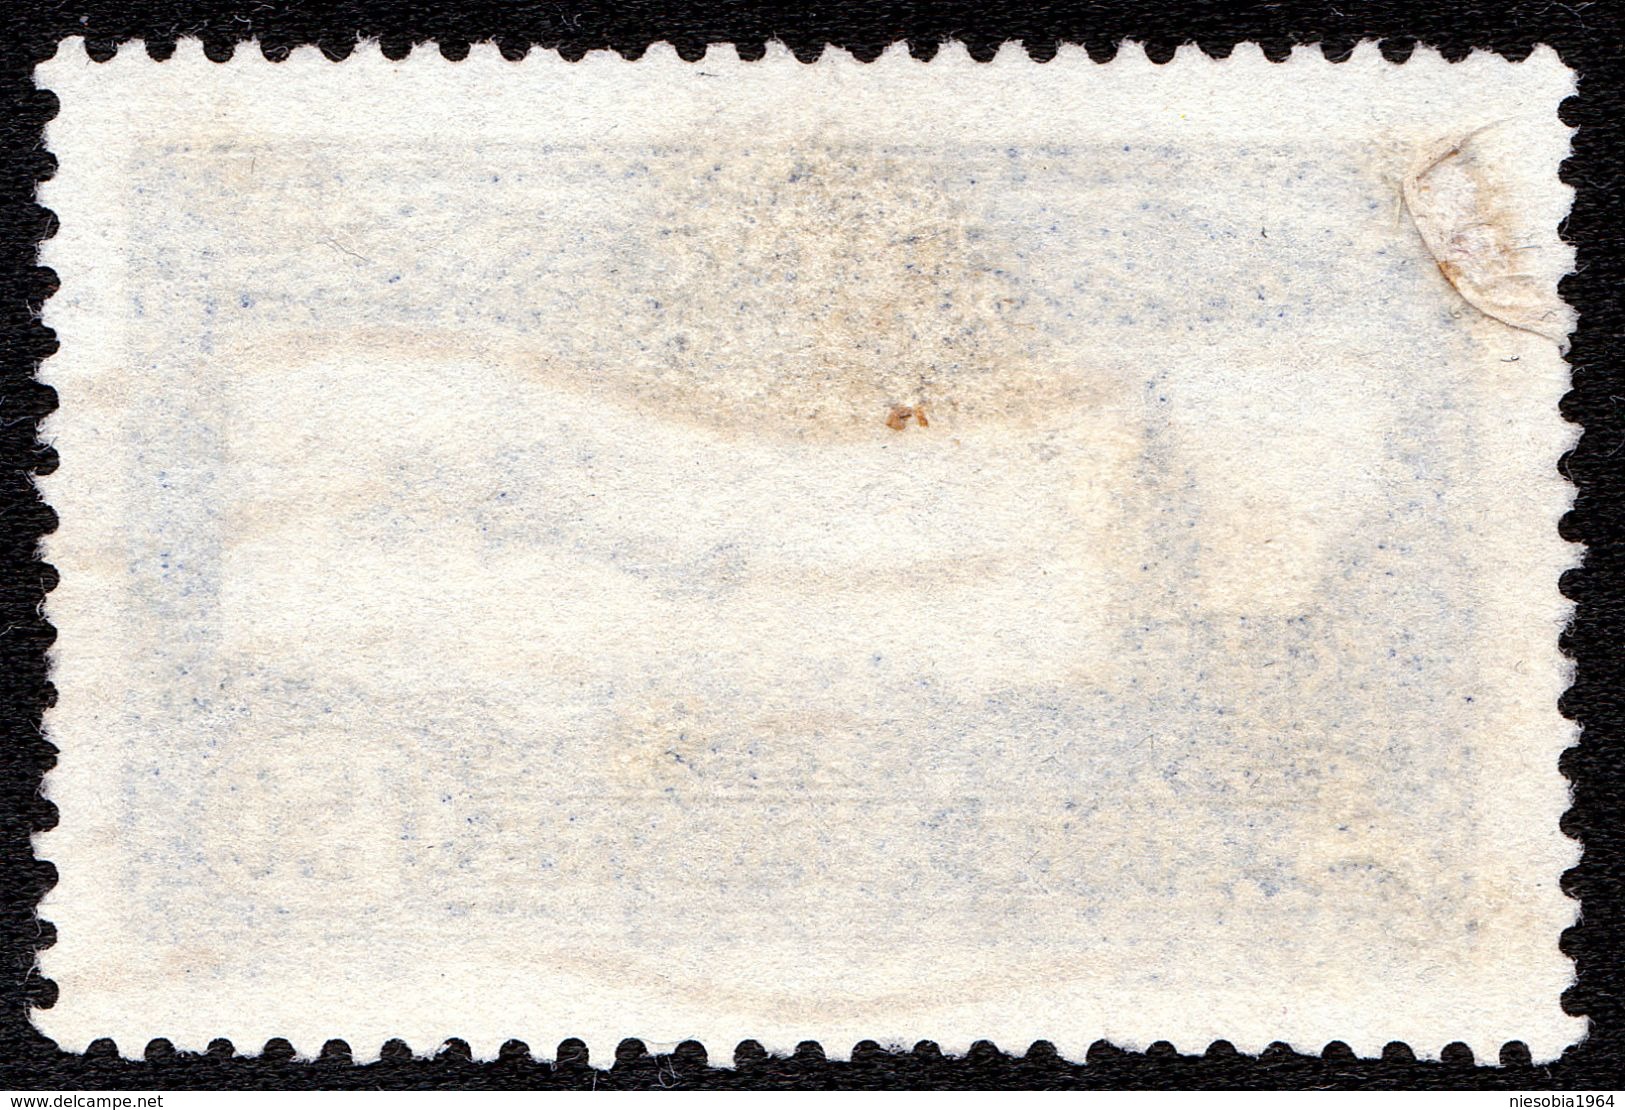 WW2 - France Stamp With Nazi Overprint -  BERLIN PARIS 1 F 50 Air Mail - Occupied France - Gebruikt